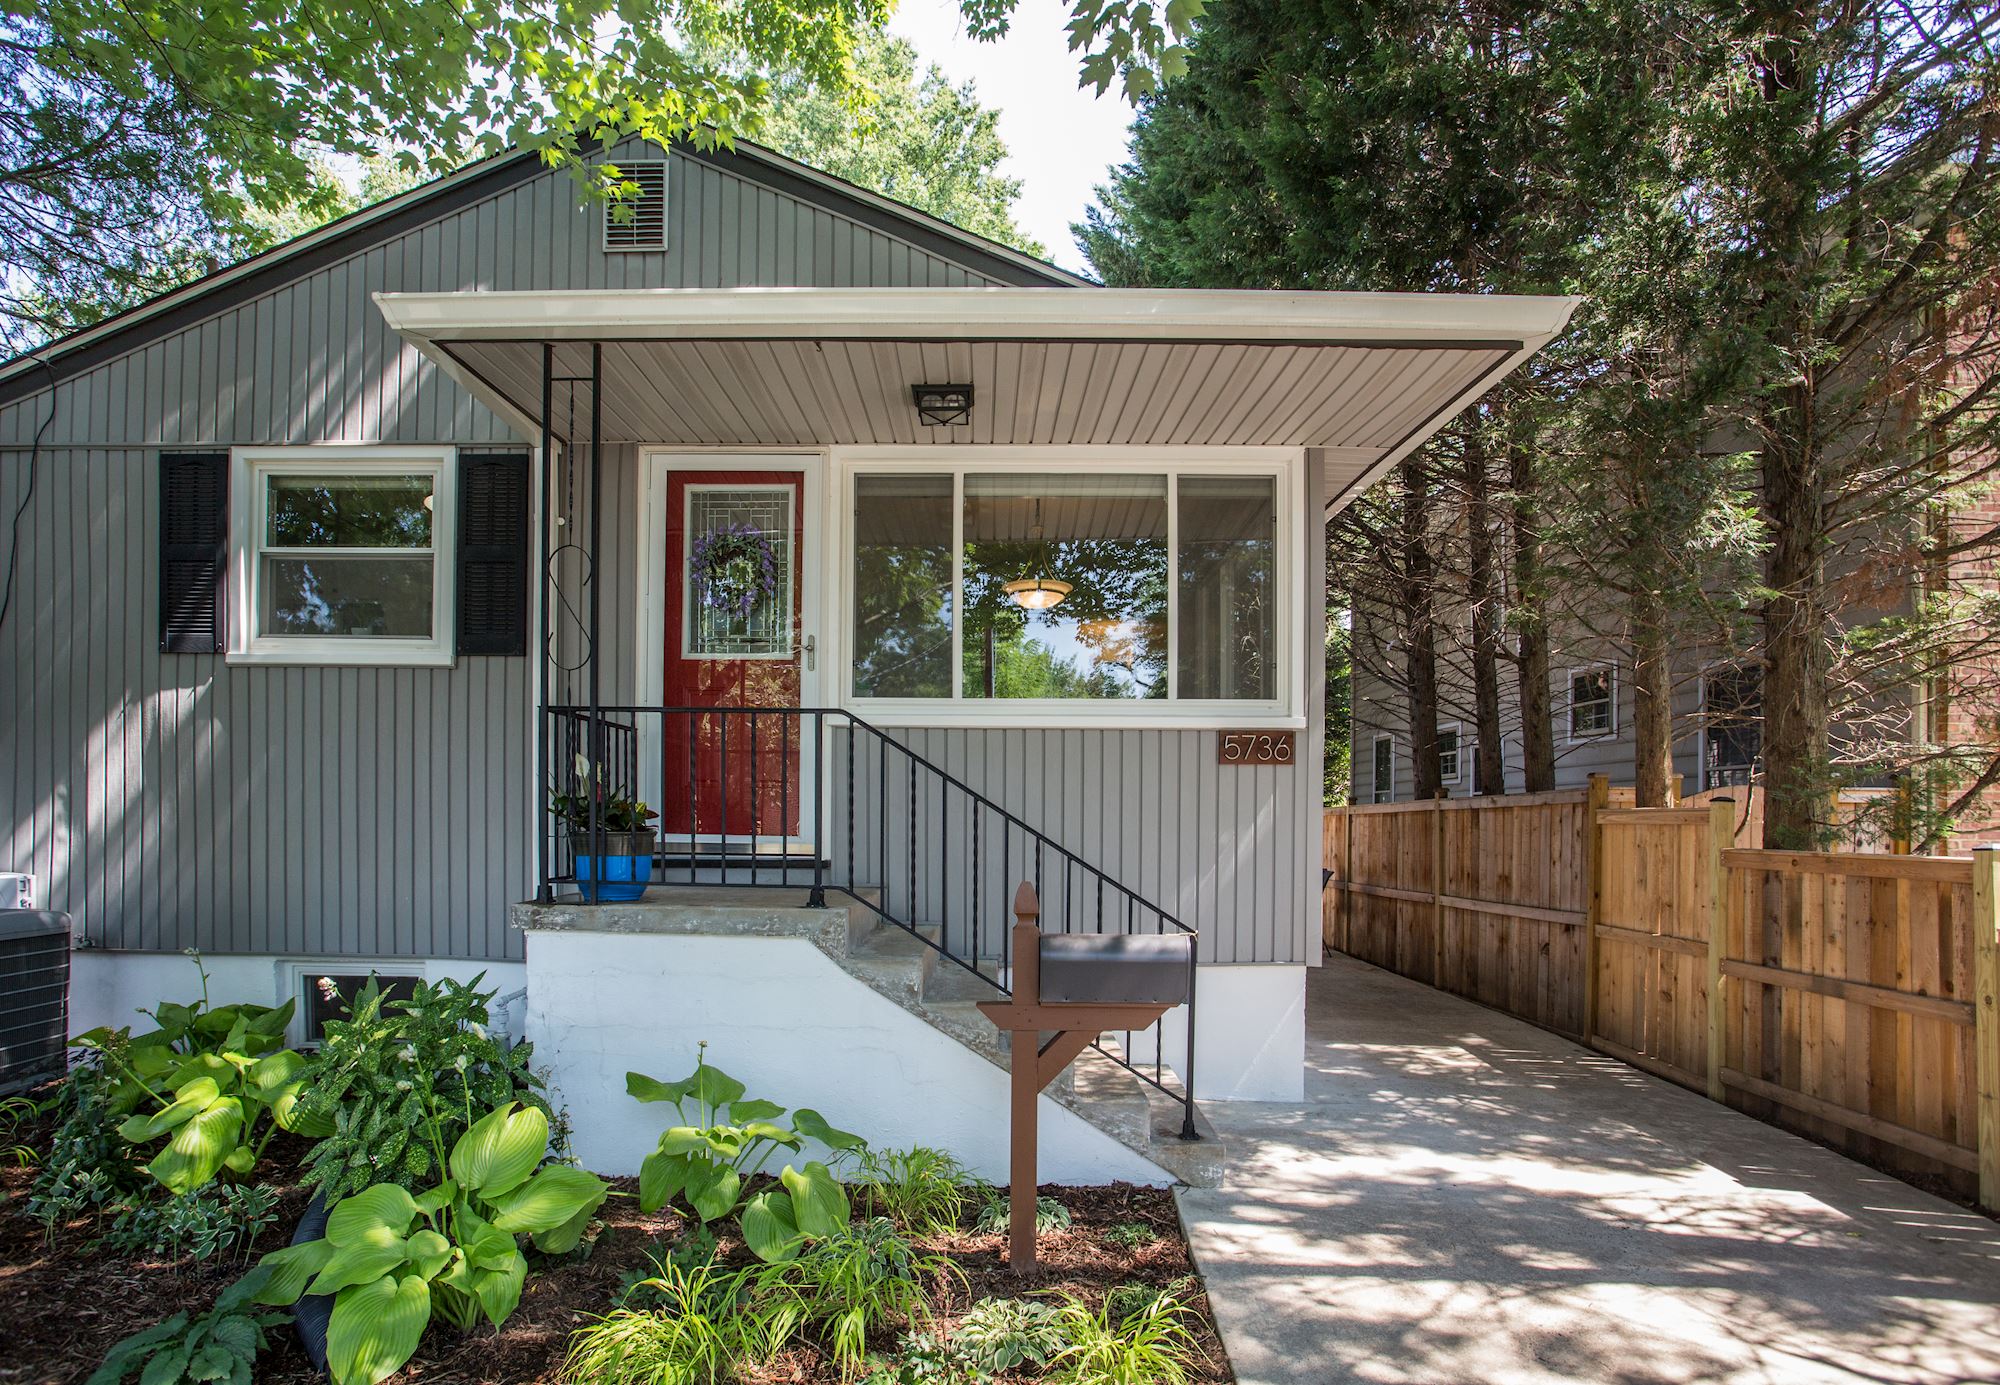 Single Family Home in Bluemont Community of Arlington,VA Sold for $45K Over List Price